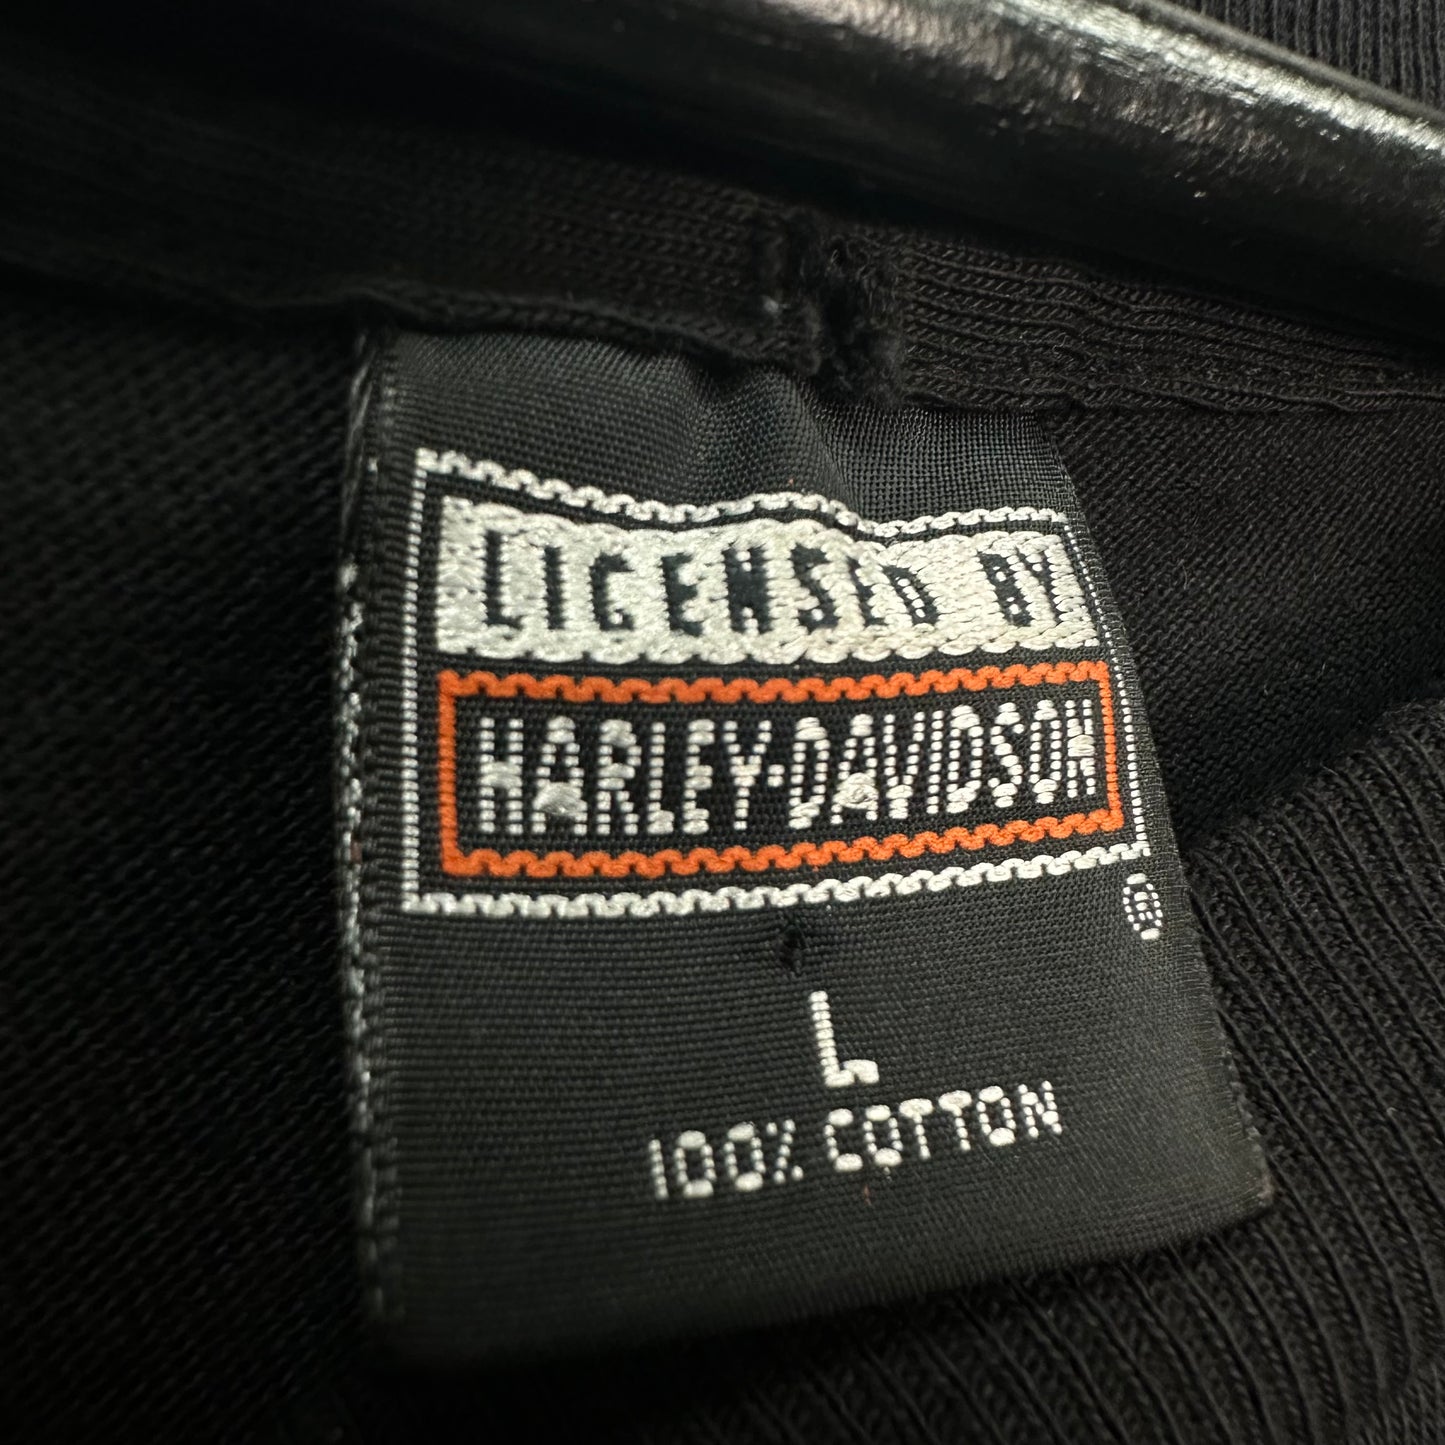 90's Harley Davidson "A Timeless Tradition" Shirt - L